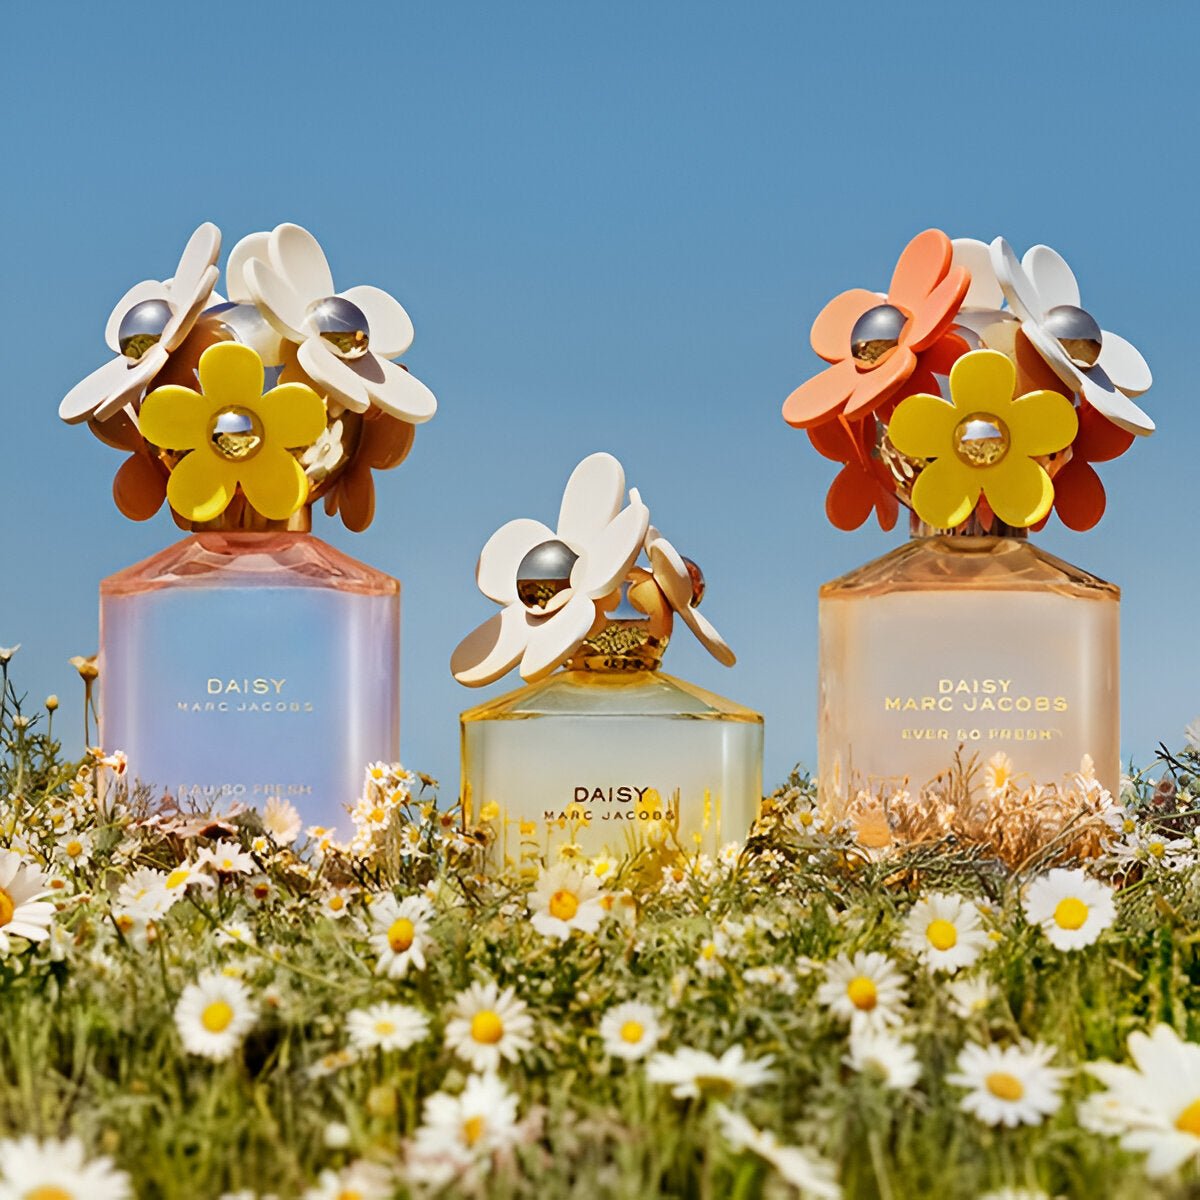 MARC JACOBS Daisy Delights Fragrance & Body Care Set | My Perfume Shop